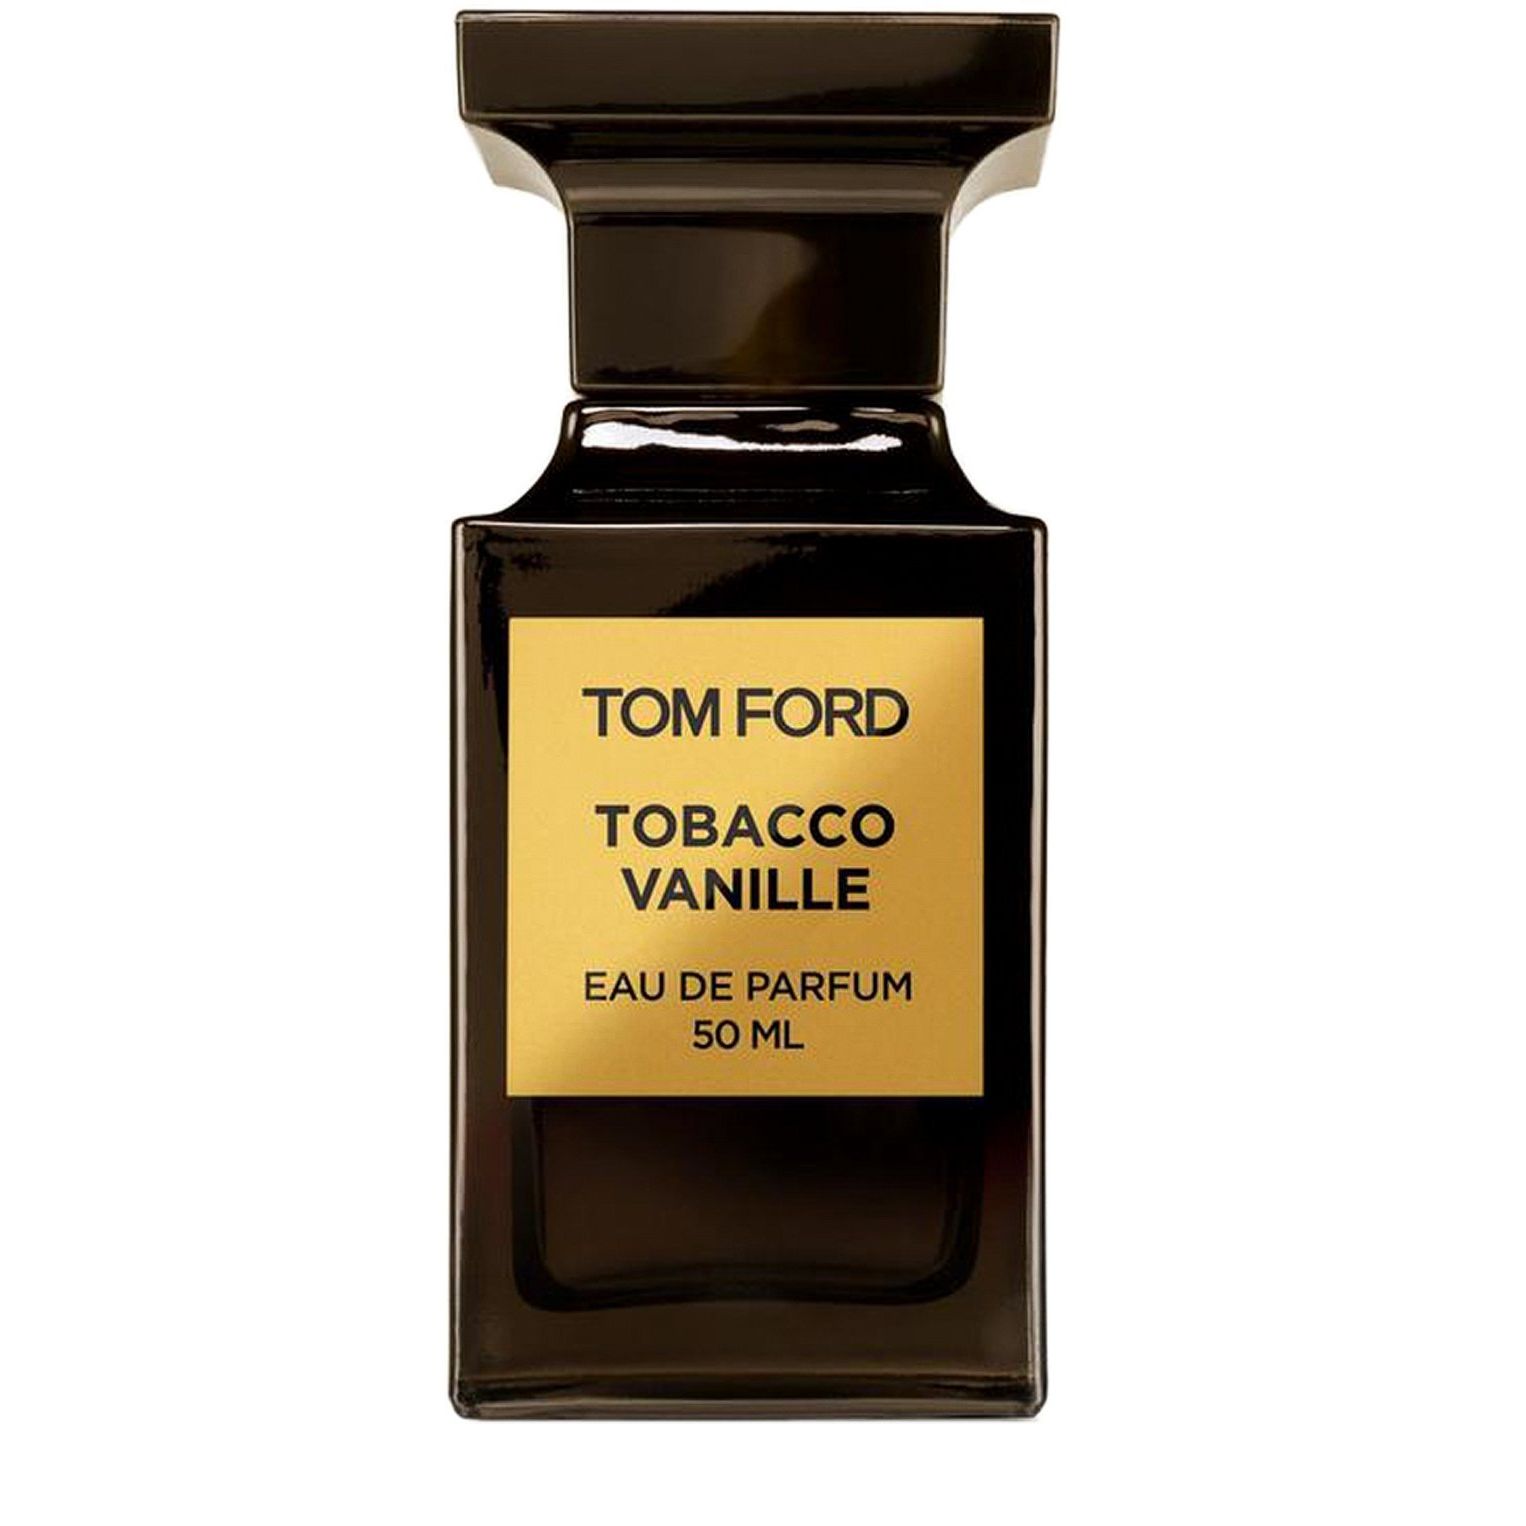 Вода парфюмерная Tom Ford Tobacco Vanille, унисекс, 50 мл - купить в Мегамаркет Москва, цена на Мегамаркет